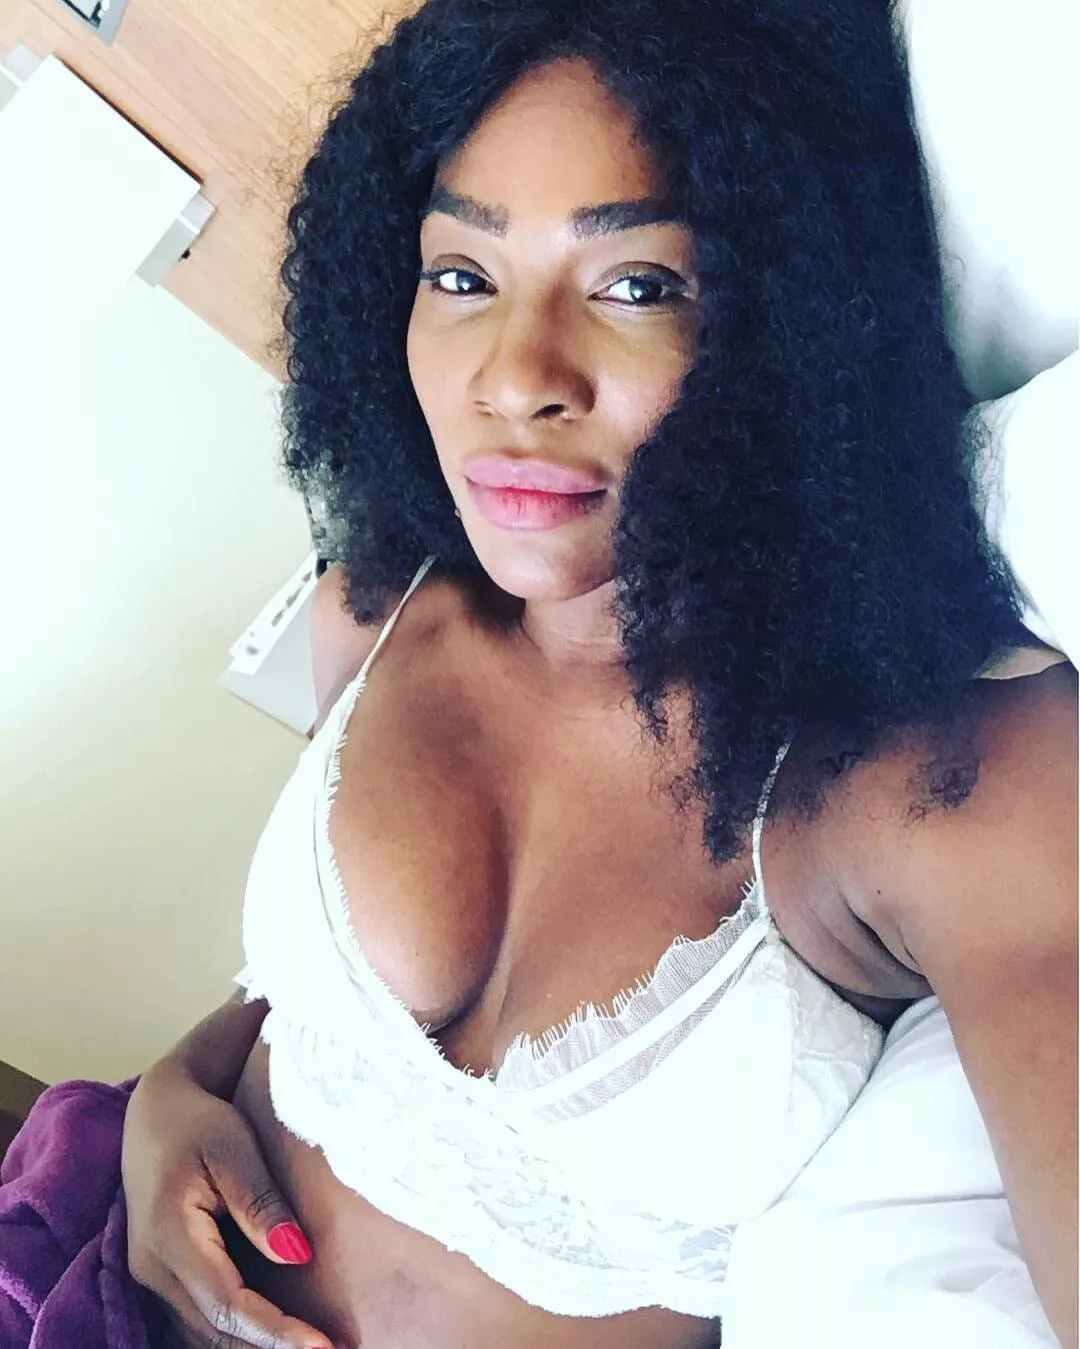 Tyra Banks Upskirt Pussy Exposed - Serena Williams Nude Pics & Sexy *NSFW* Videos